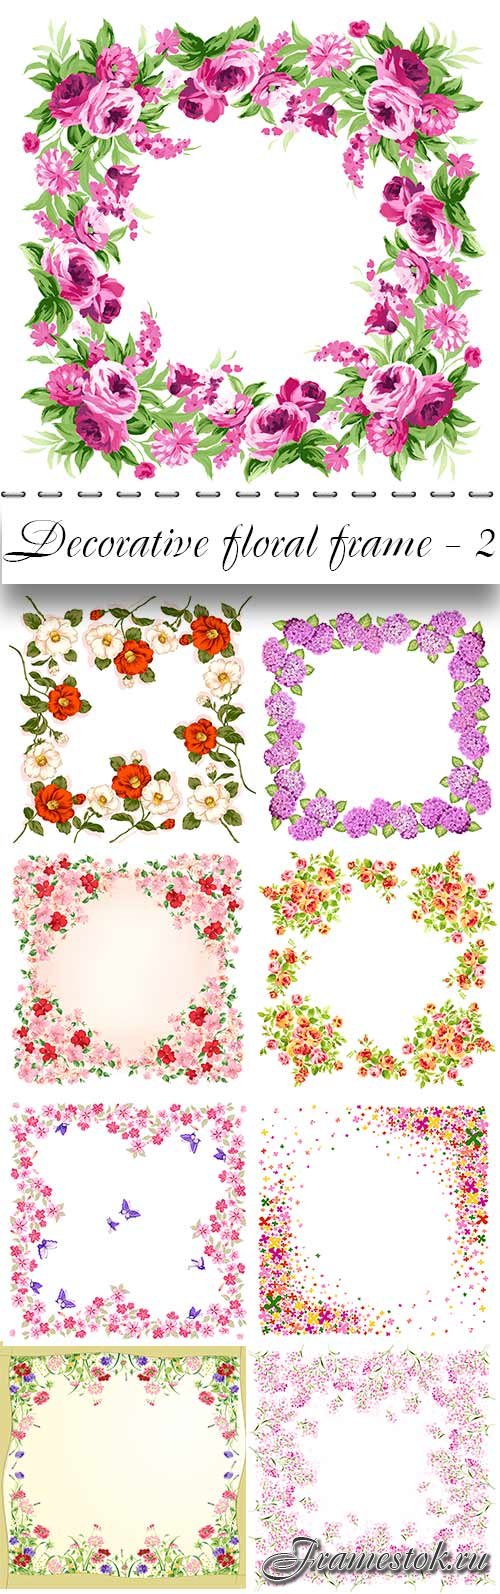 Decorative floral frame  PSD - 2